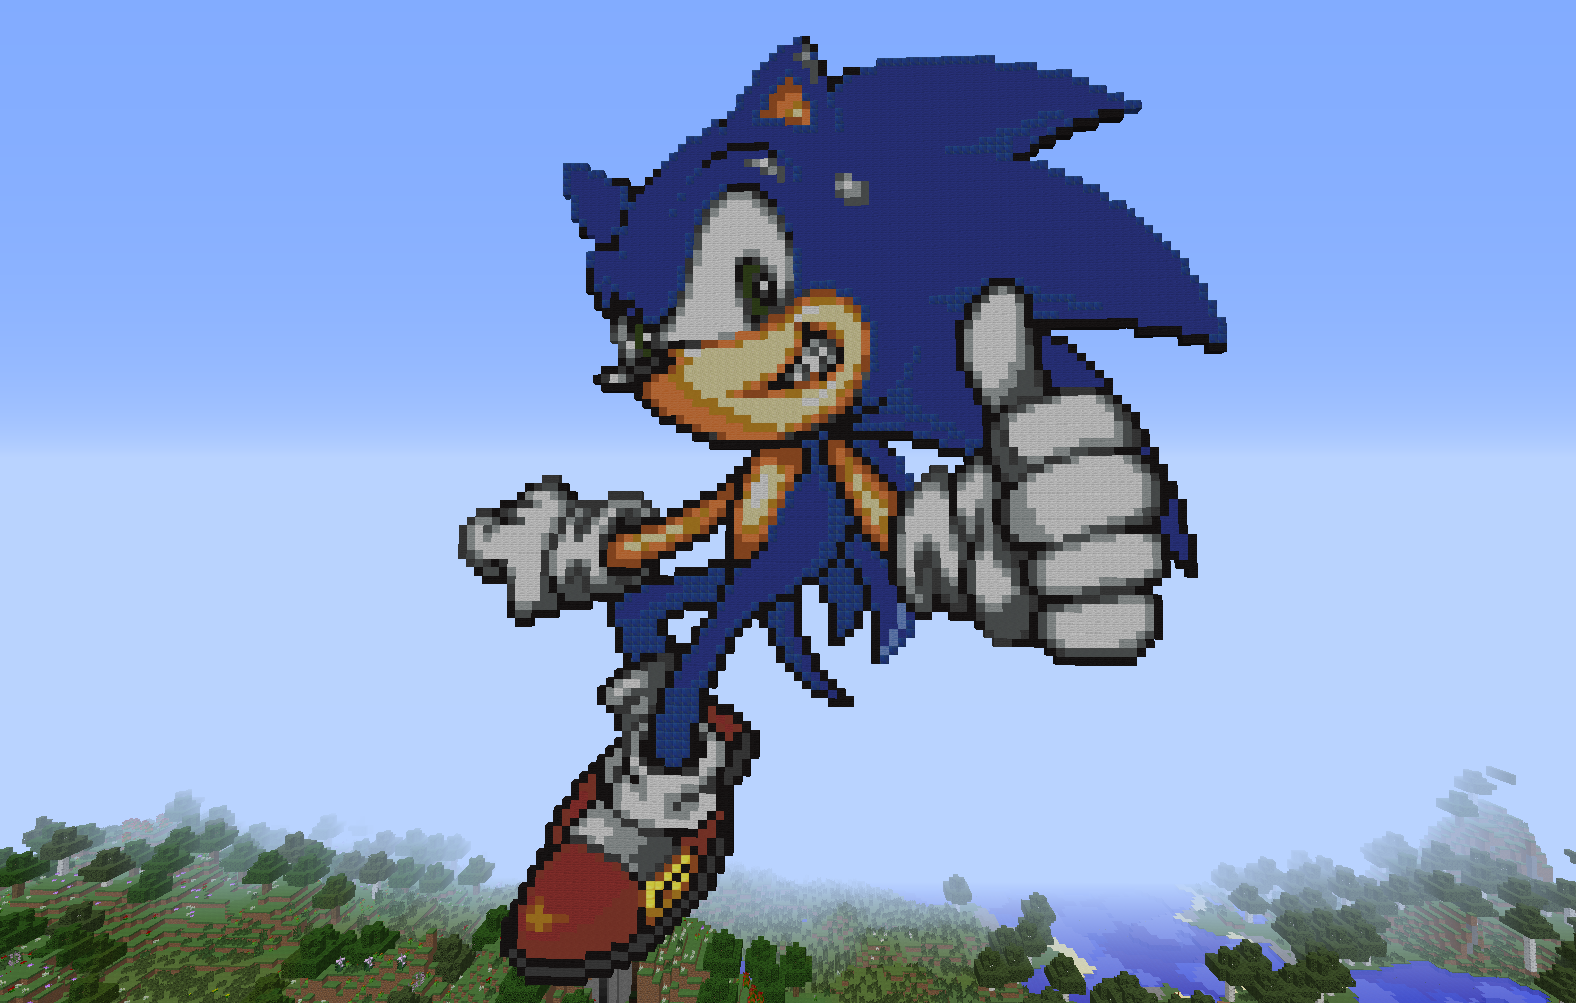 Super Sonic (Sonic X / Sonic Advance 2) : r/PixelArt